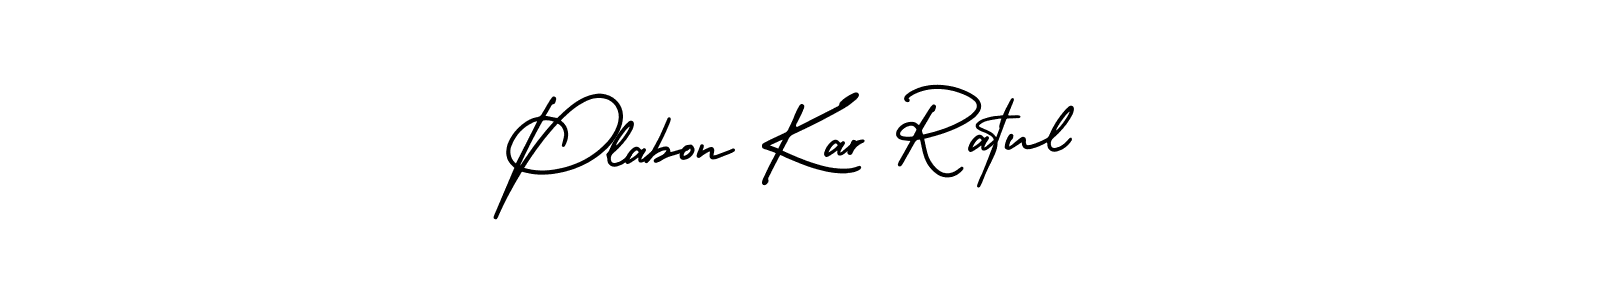 How to Draw Plabon Kar Ratul signature style? AmerikaSignatureDemo-Regular is a latest design signature styles for name Plabon Kar Ratul. Plabon Kar Ratul signature style 3 images and pictures png